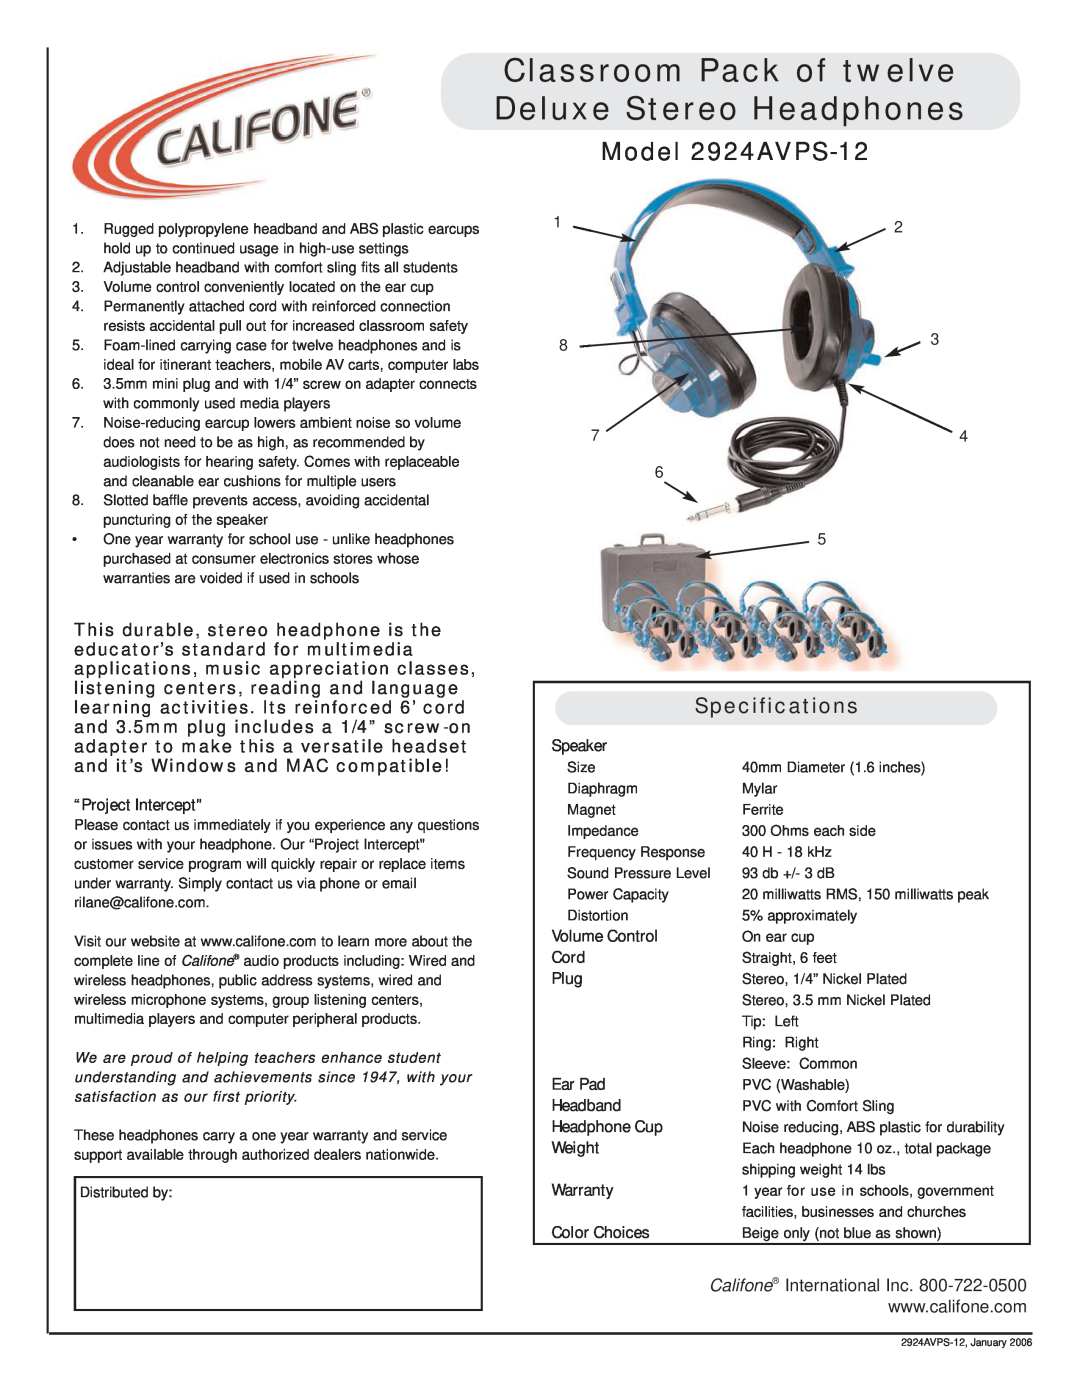 Califone specifications Classroom Pack of twelve Deluxe Stereo Headphones, Model 2924AVPS-12, Specifications 